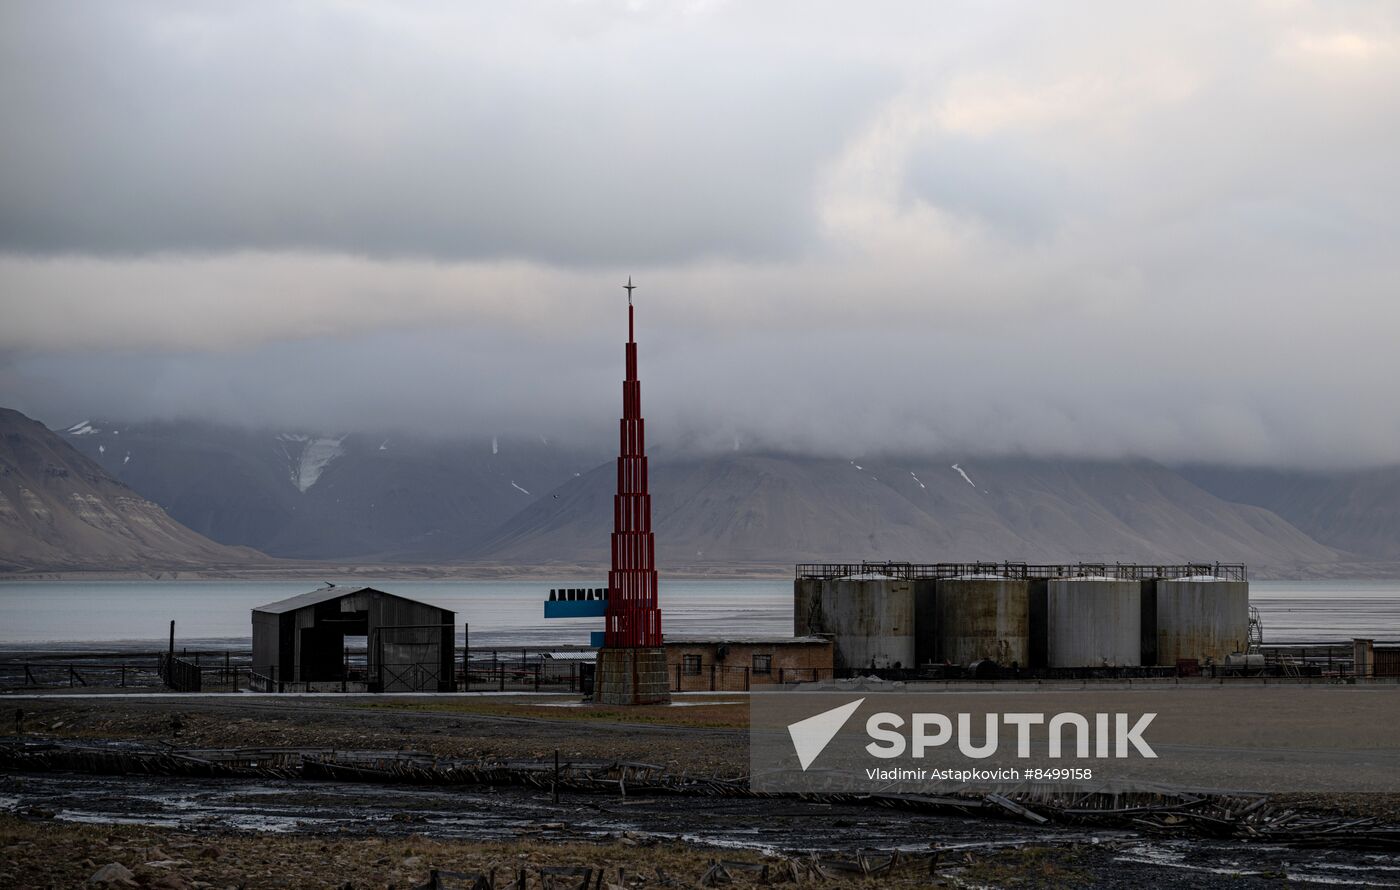 Norway Svalbard Archipelago Pyramiden Settlement